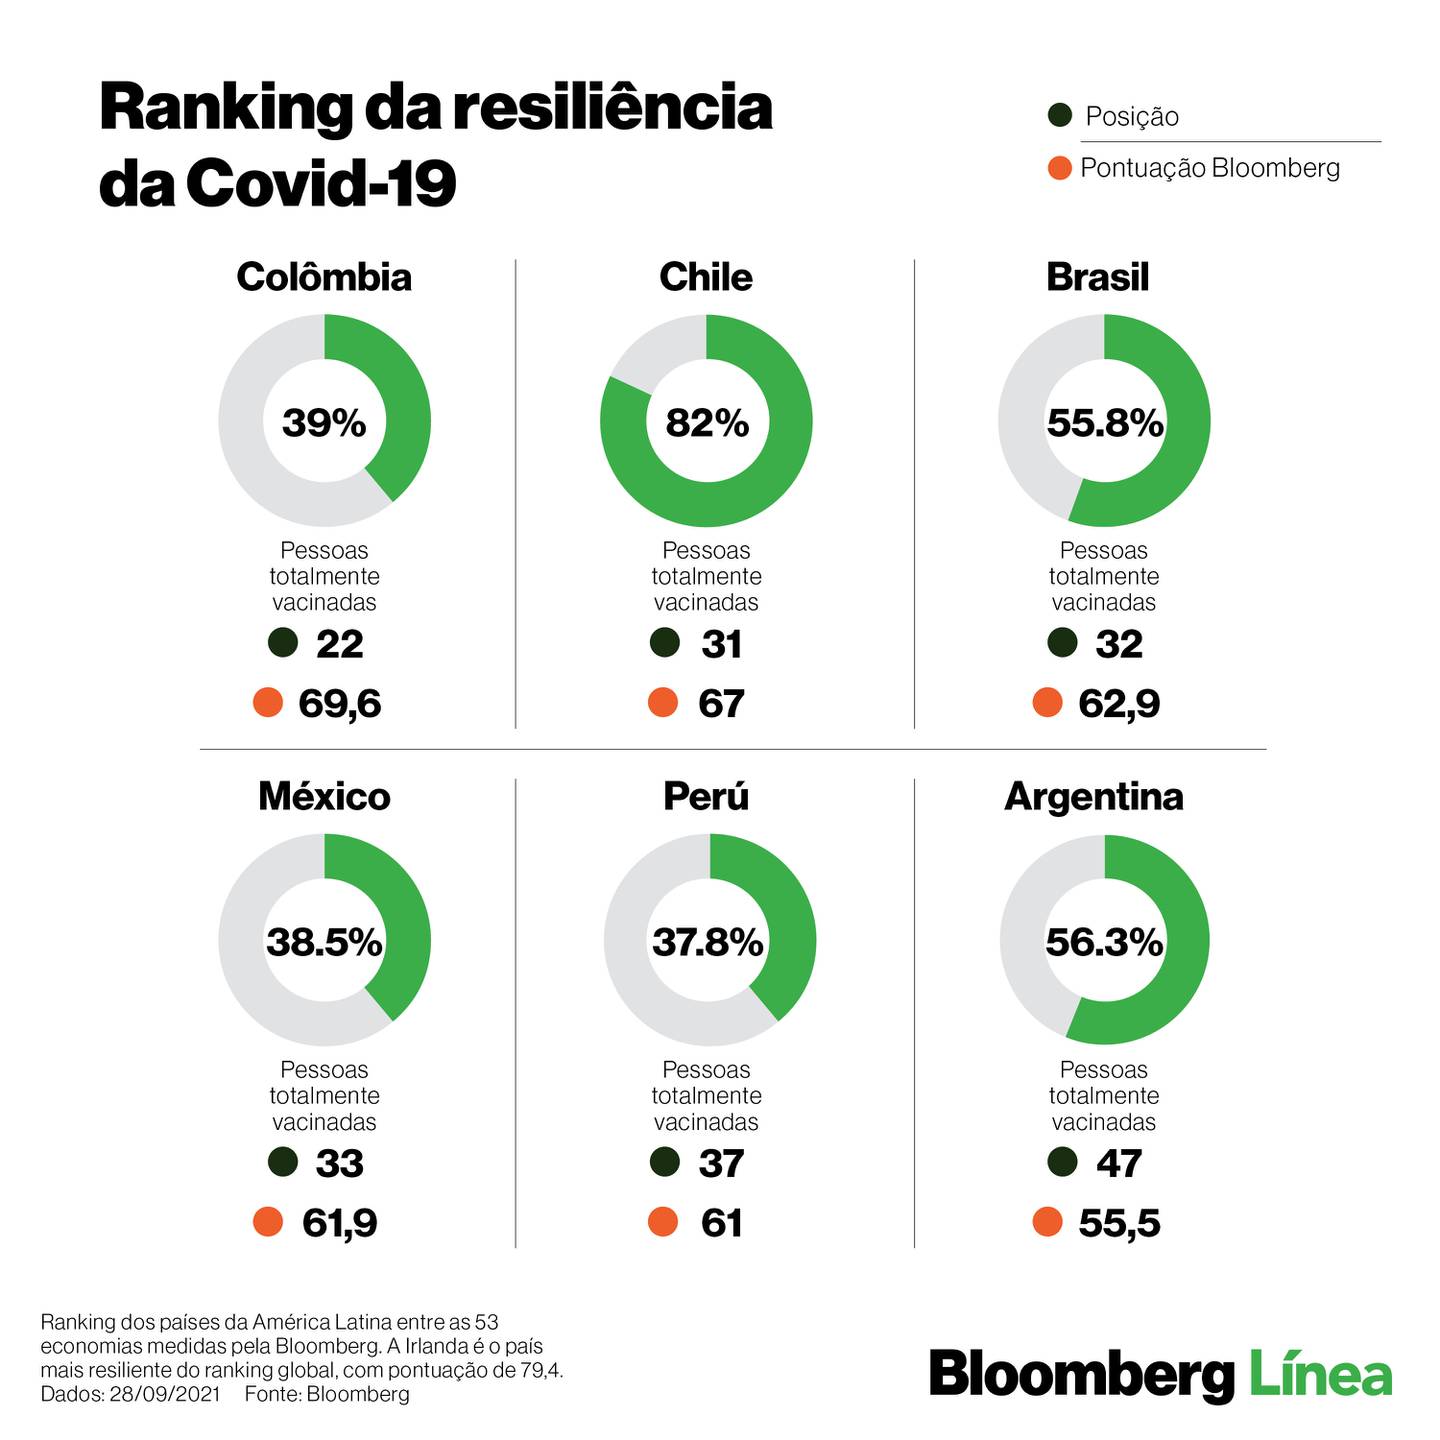 Ranking dos países da América Latinadfd